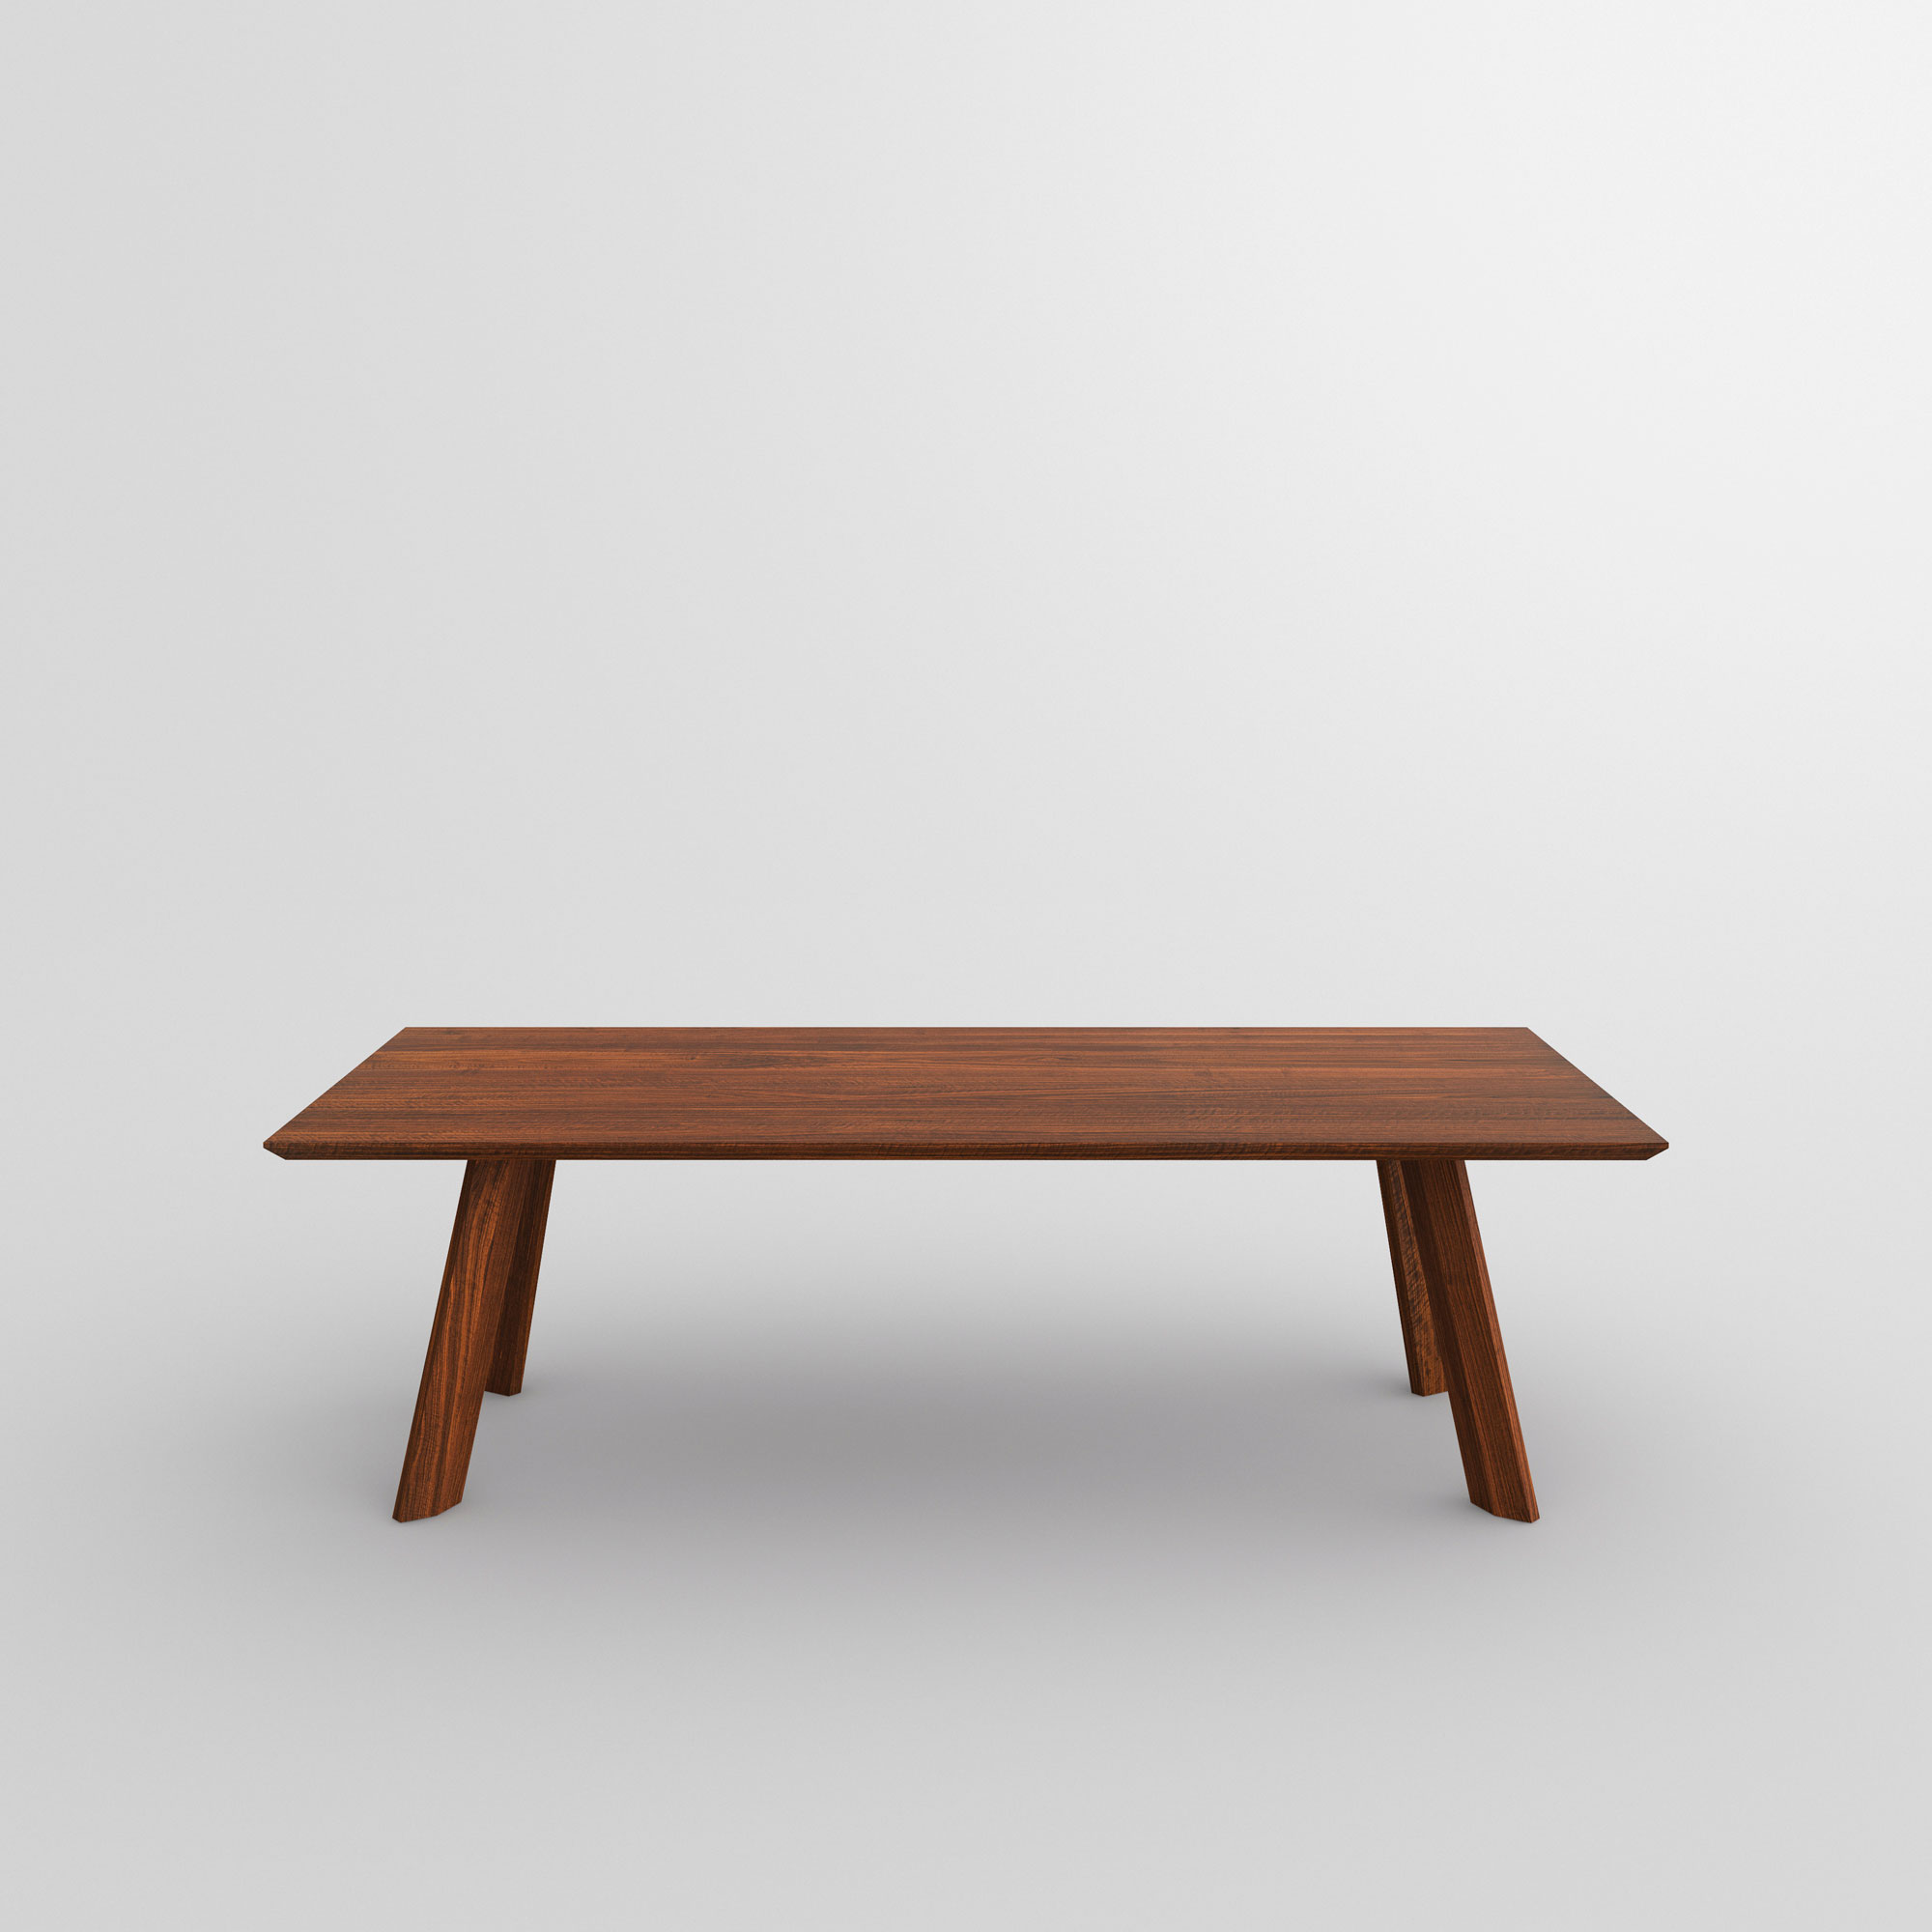 Designer Living Room Table RHOMBI BASIC cam3 custom made in solid wood by vitamin design